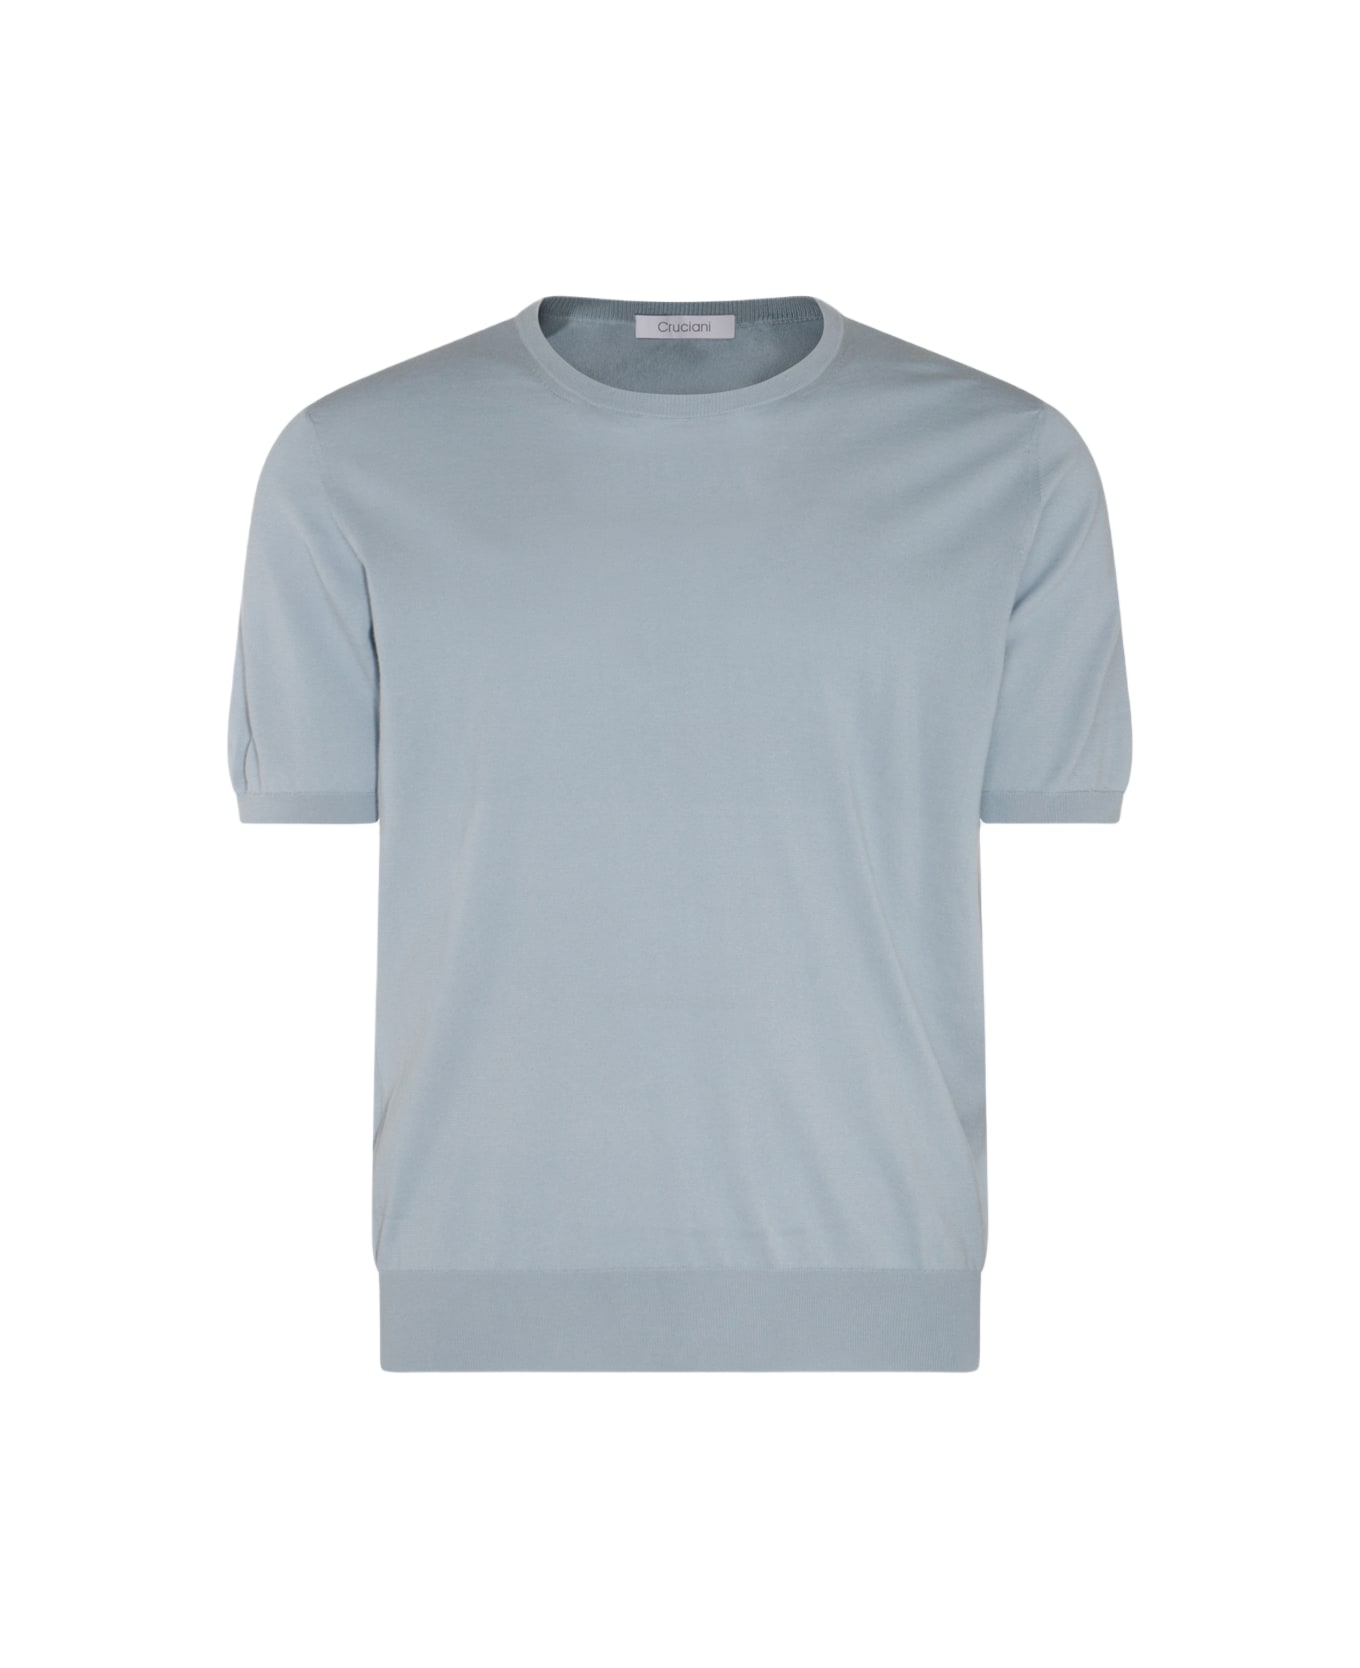 Cruciani Light Blue Cotton T-shirt - Cielo